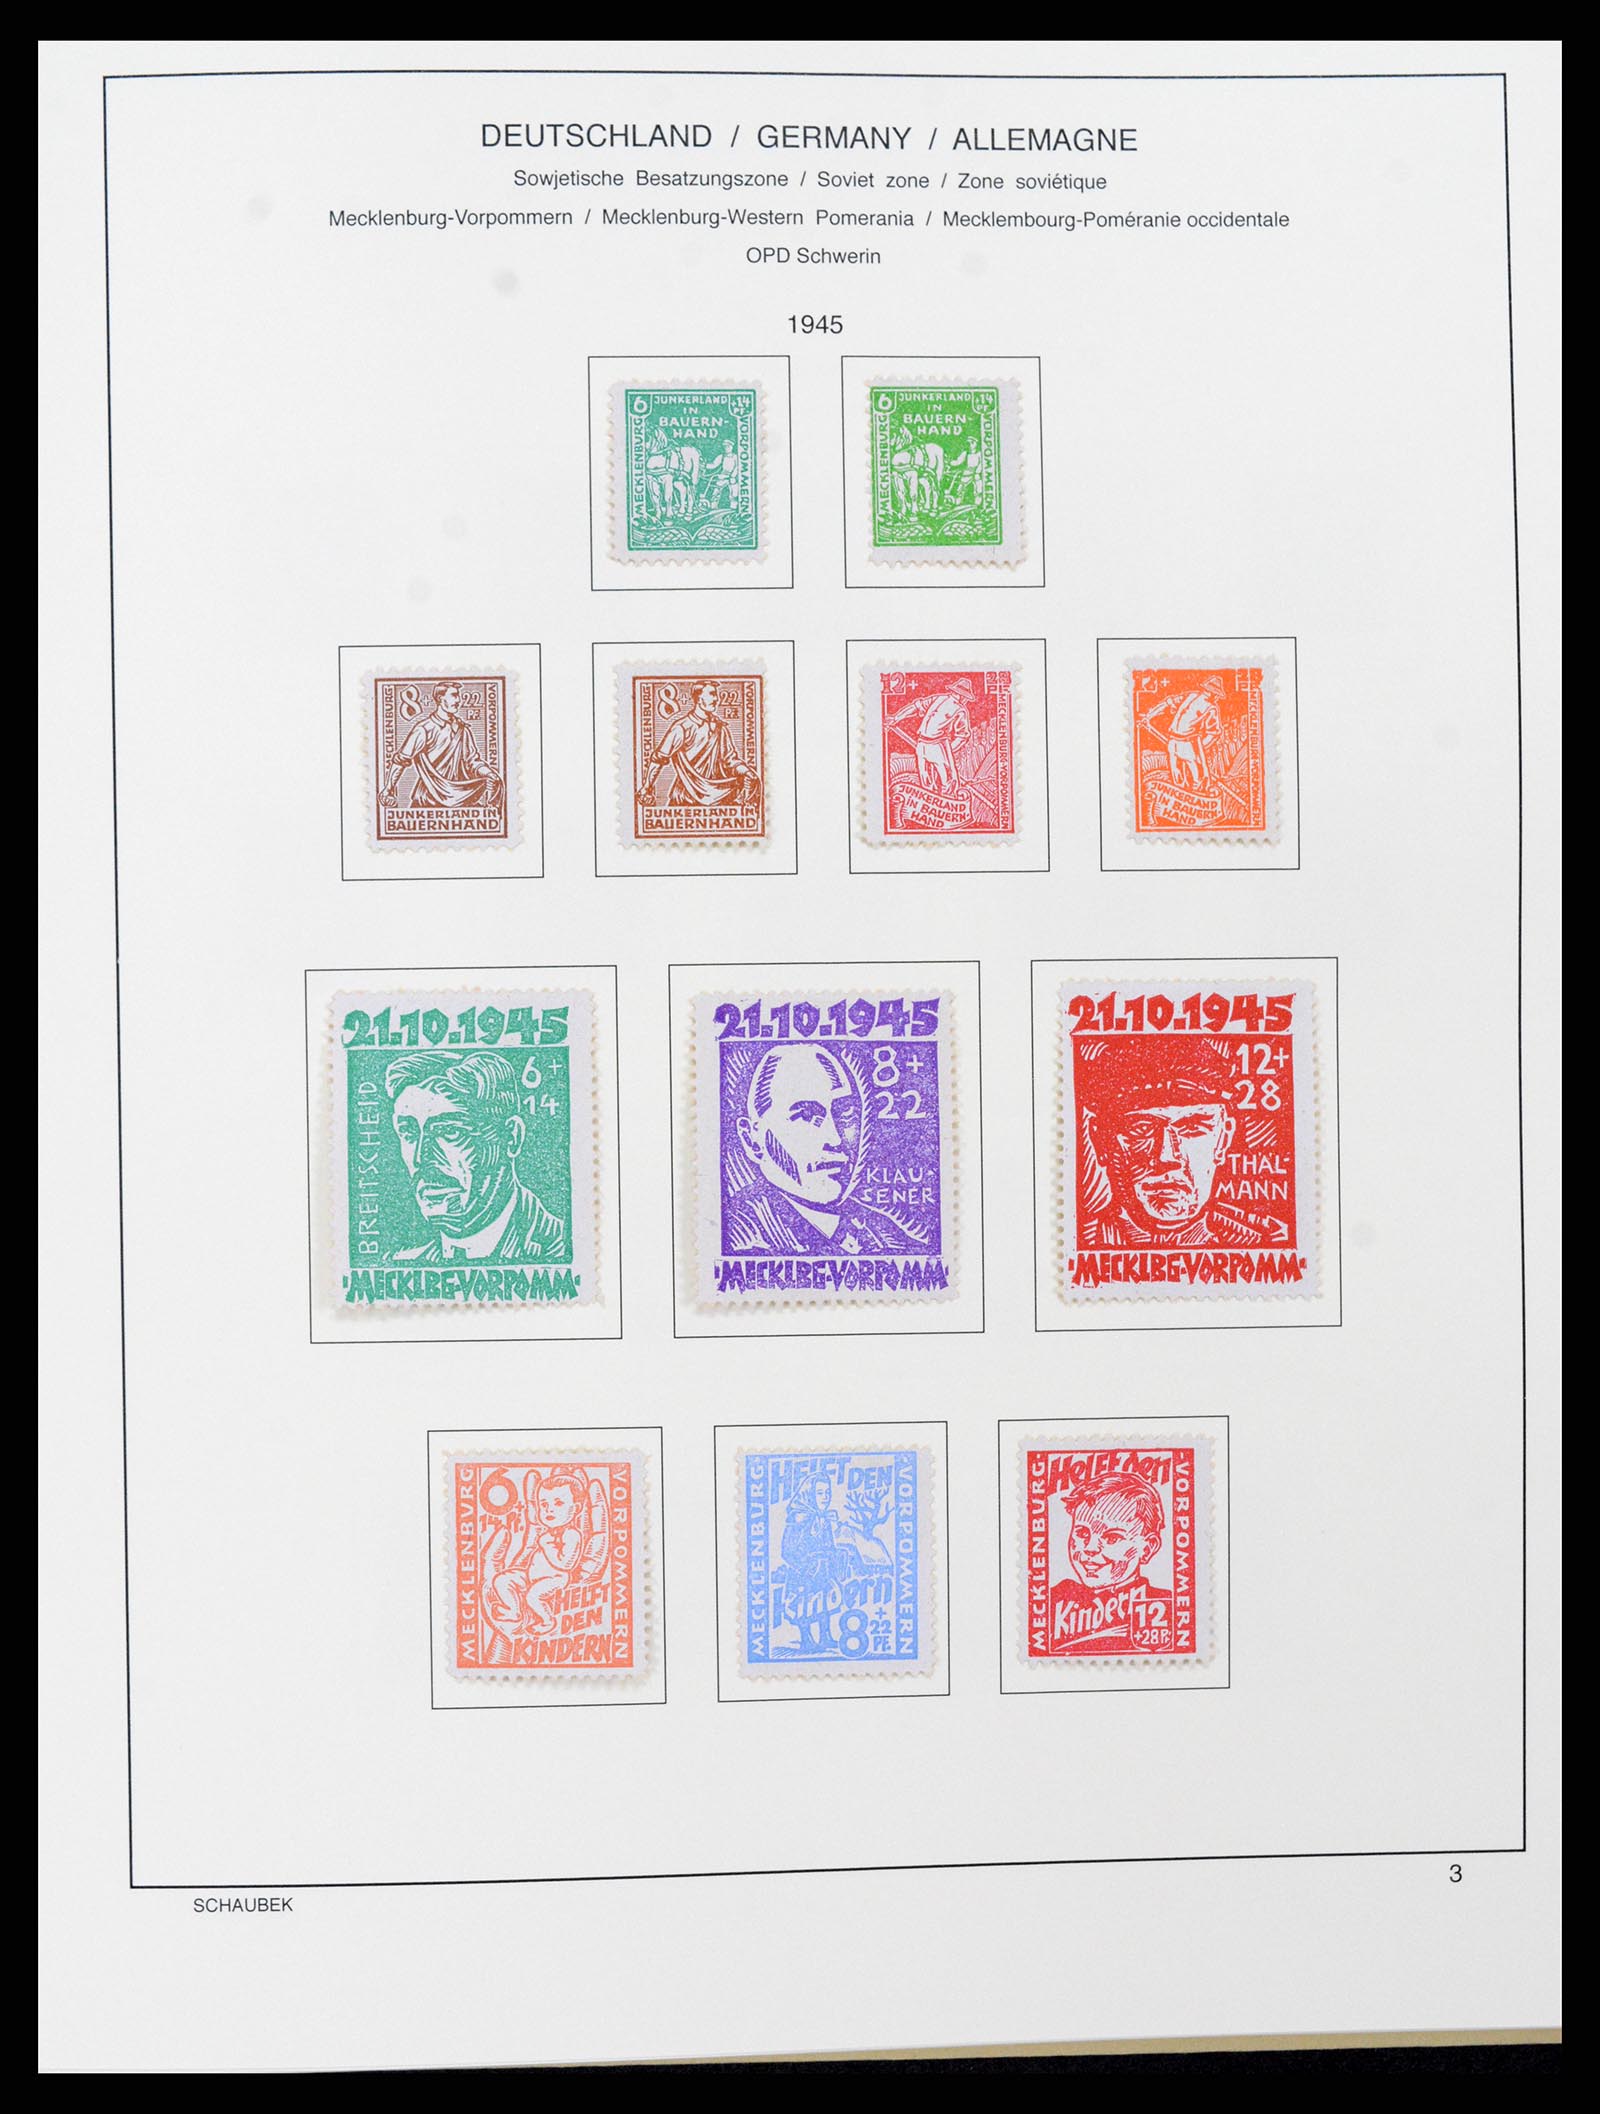 37645 021 - Stamp collection 37645 German Zones 1945-1949.